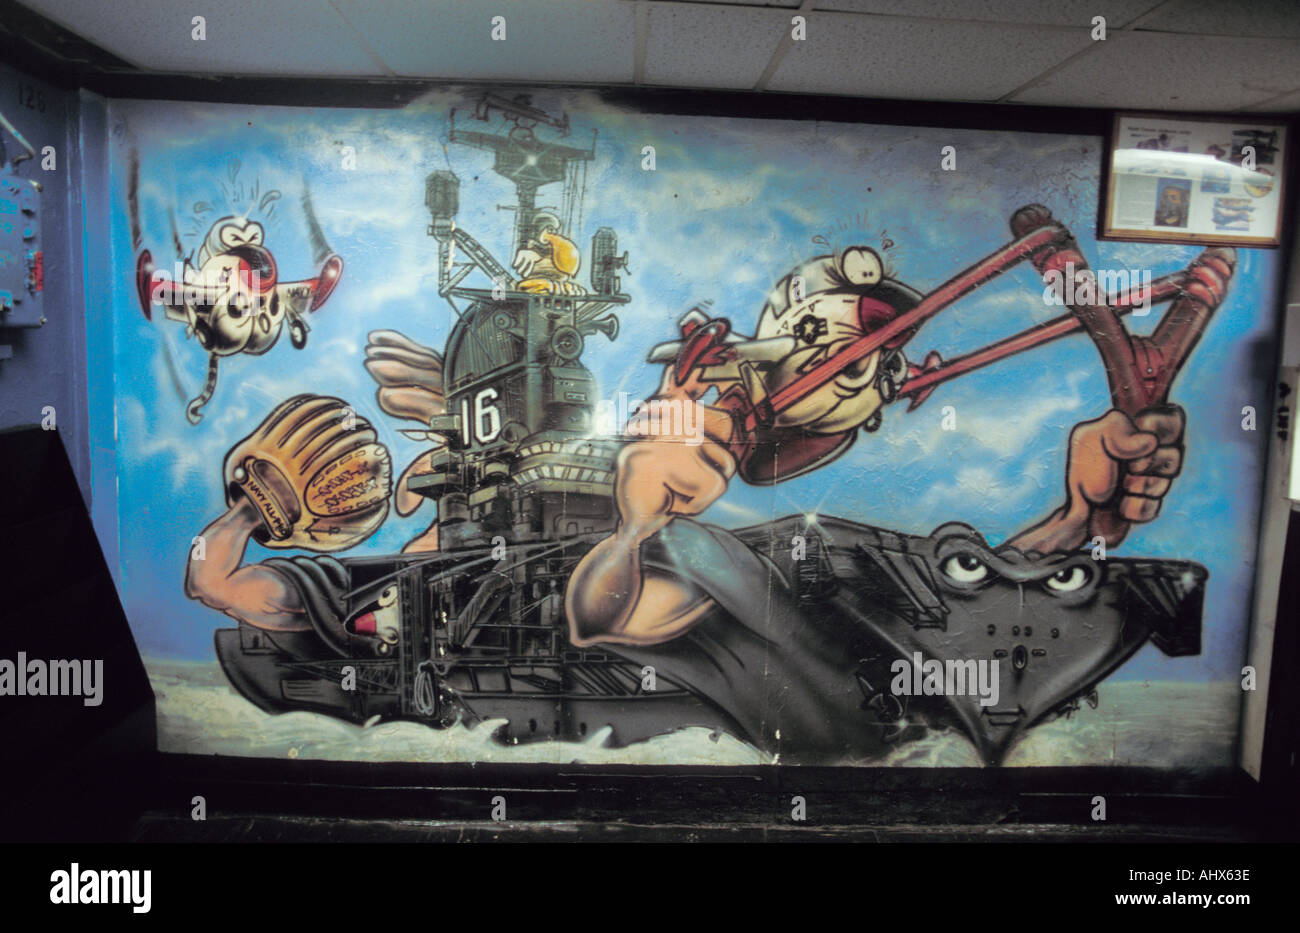 Corpus Christi Texas USA USS Lexington Aircraft Carrier Museum Cartoon mural depicting catapult take off and arrested landing Stock Photo